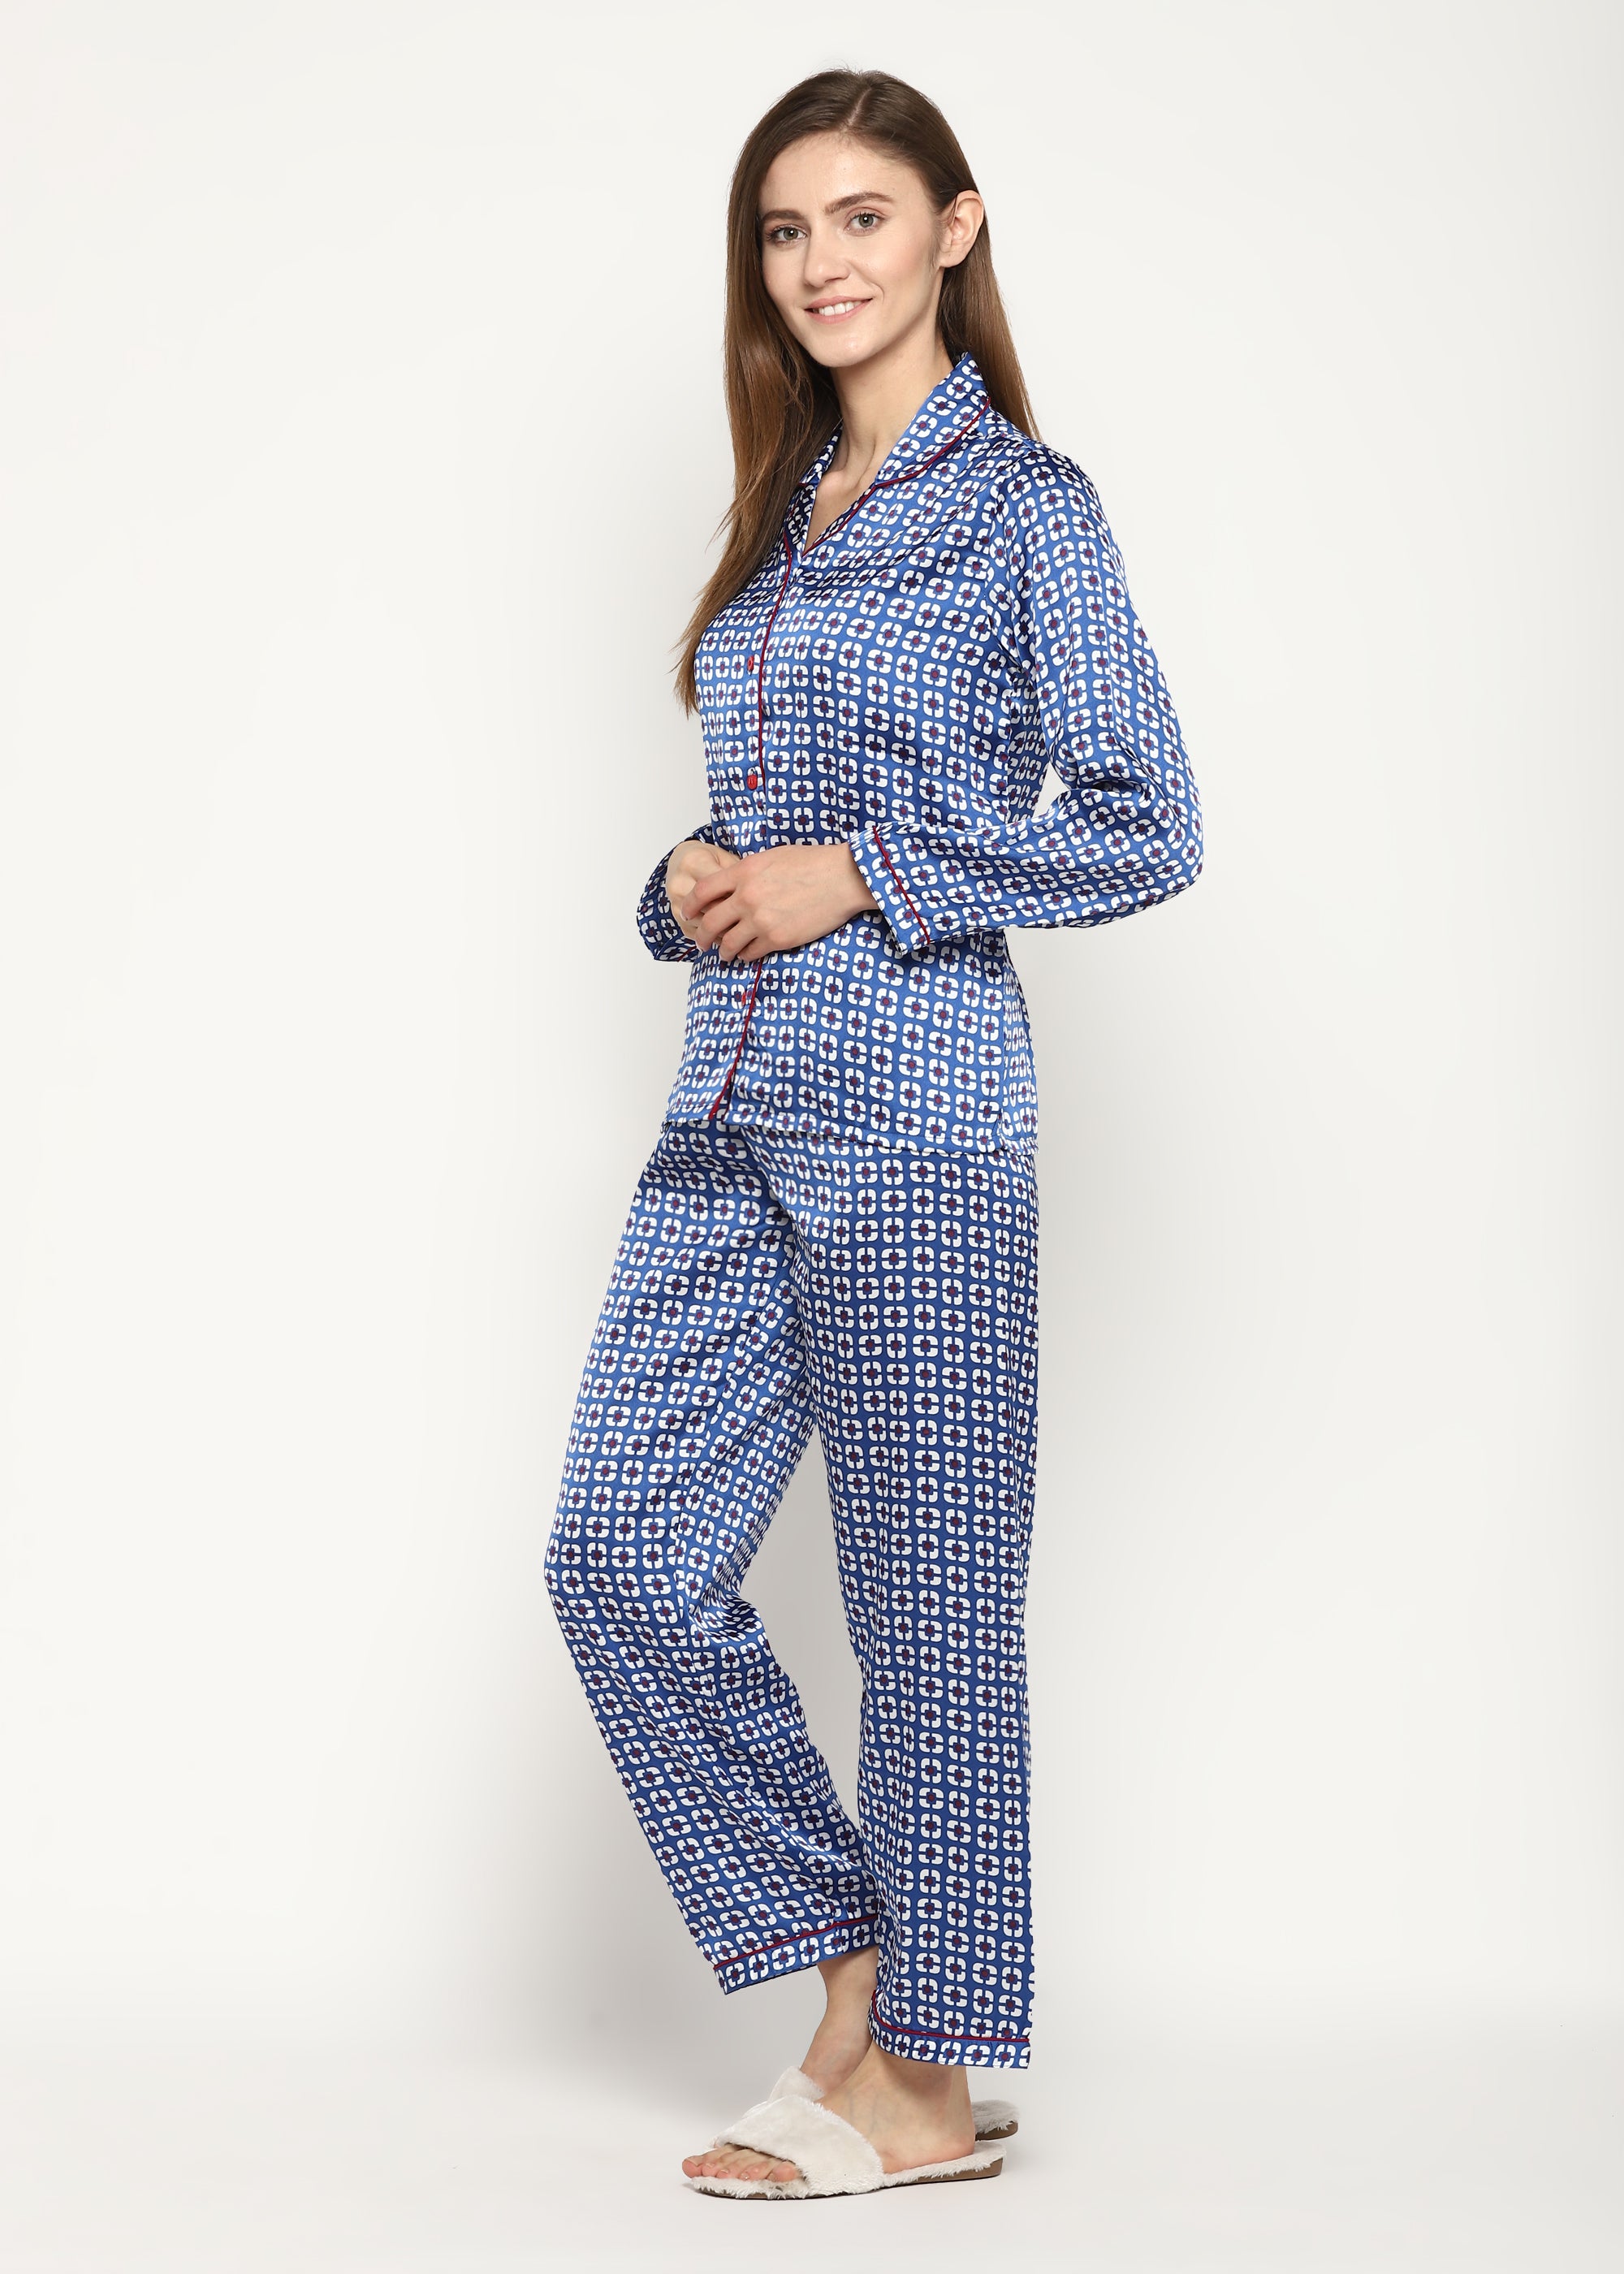 Blue Geometric Print Long Sleeve Women's Night Suit - Shopbloom